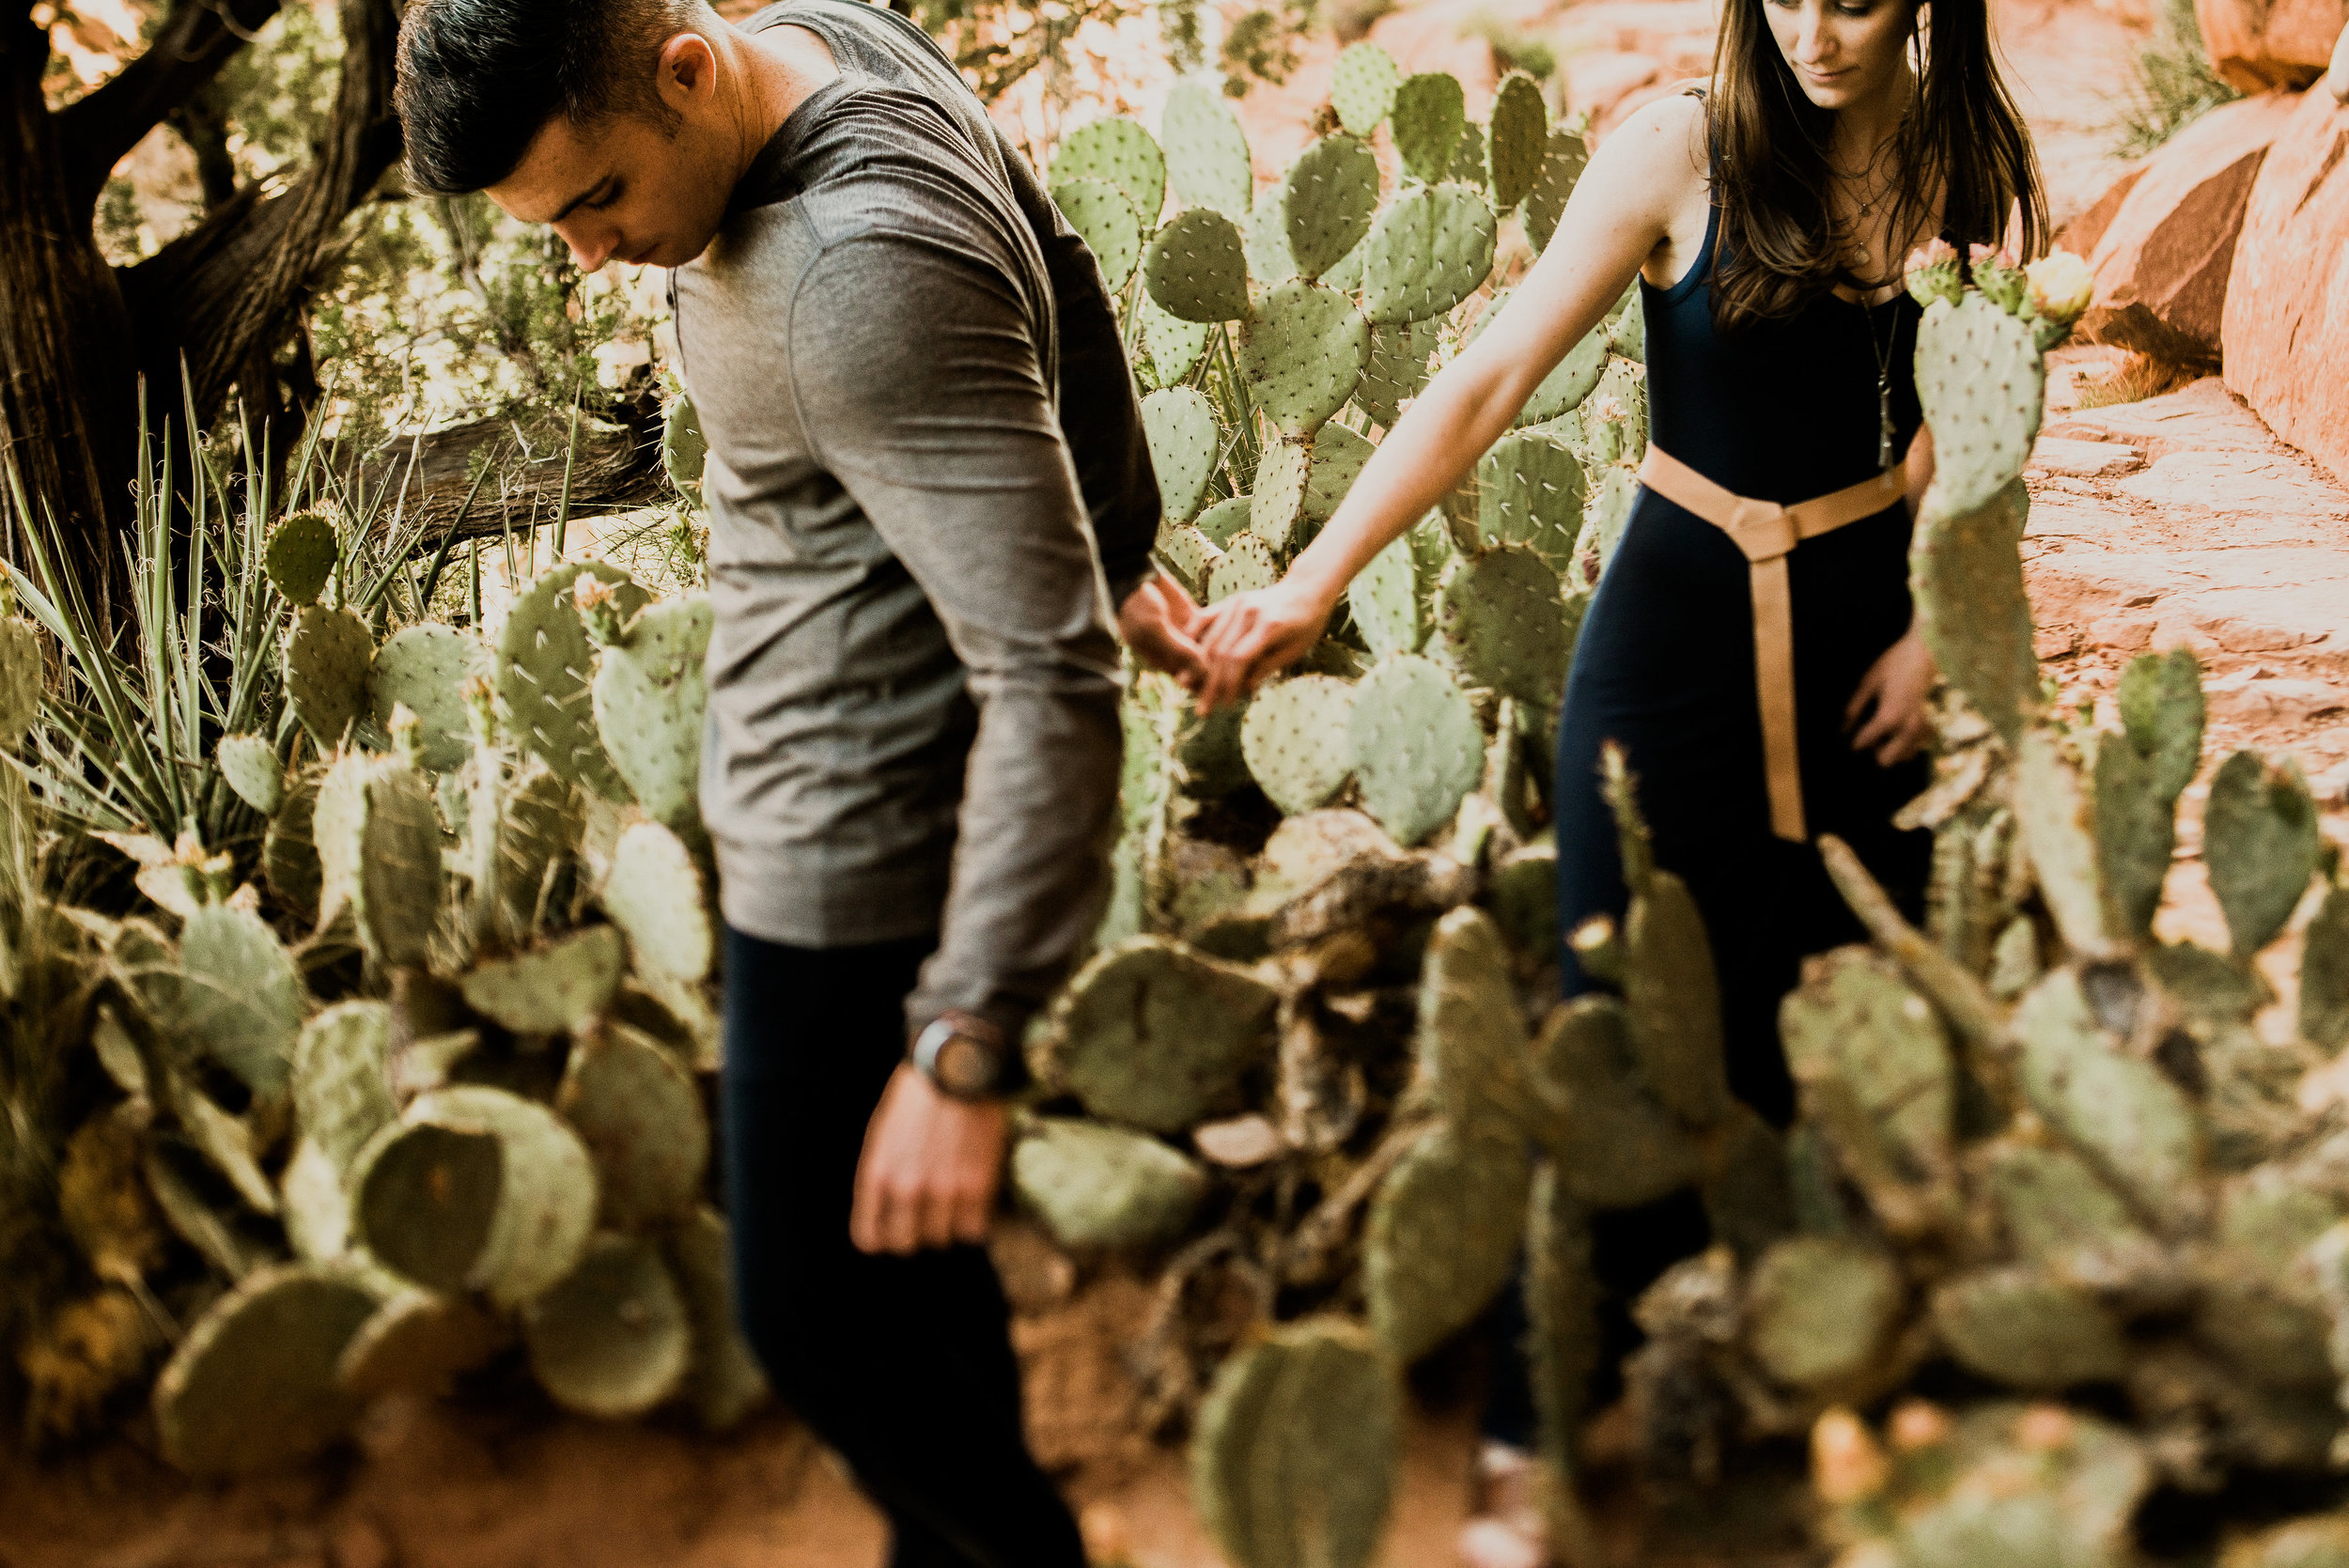 Isaiah-&-Taylor-Photography---Paul-&-Karen-Engagement,-Sedona-Arizona-123.jpg